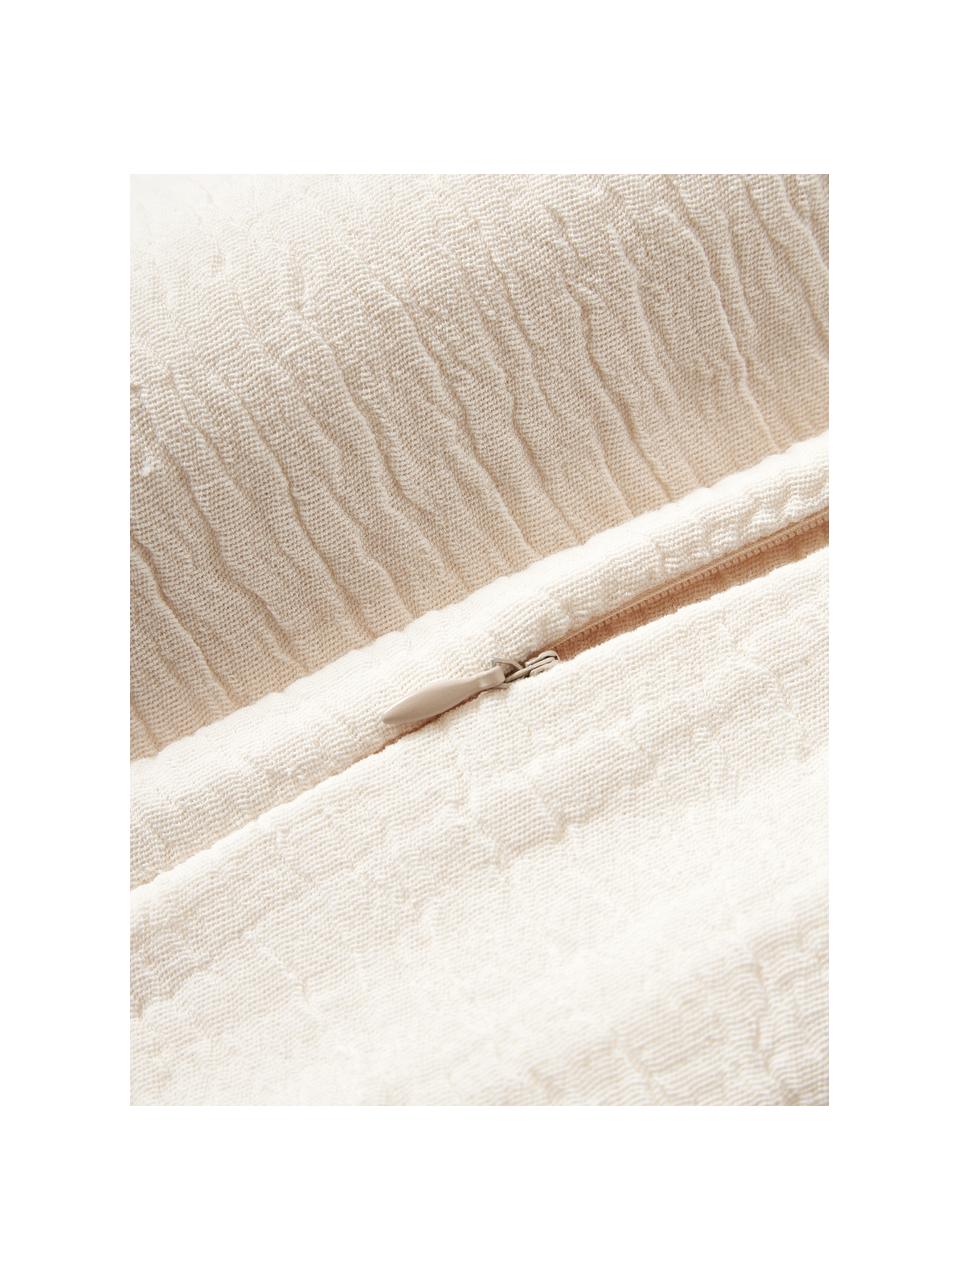 Katoenen kussenhoes Piera met franjes, 100% katoen, Crèmewit, B 45 x L 45 cm